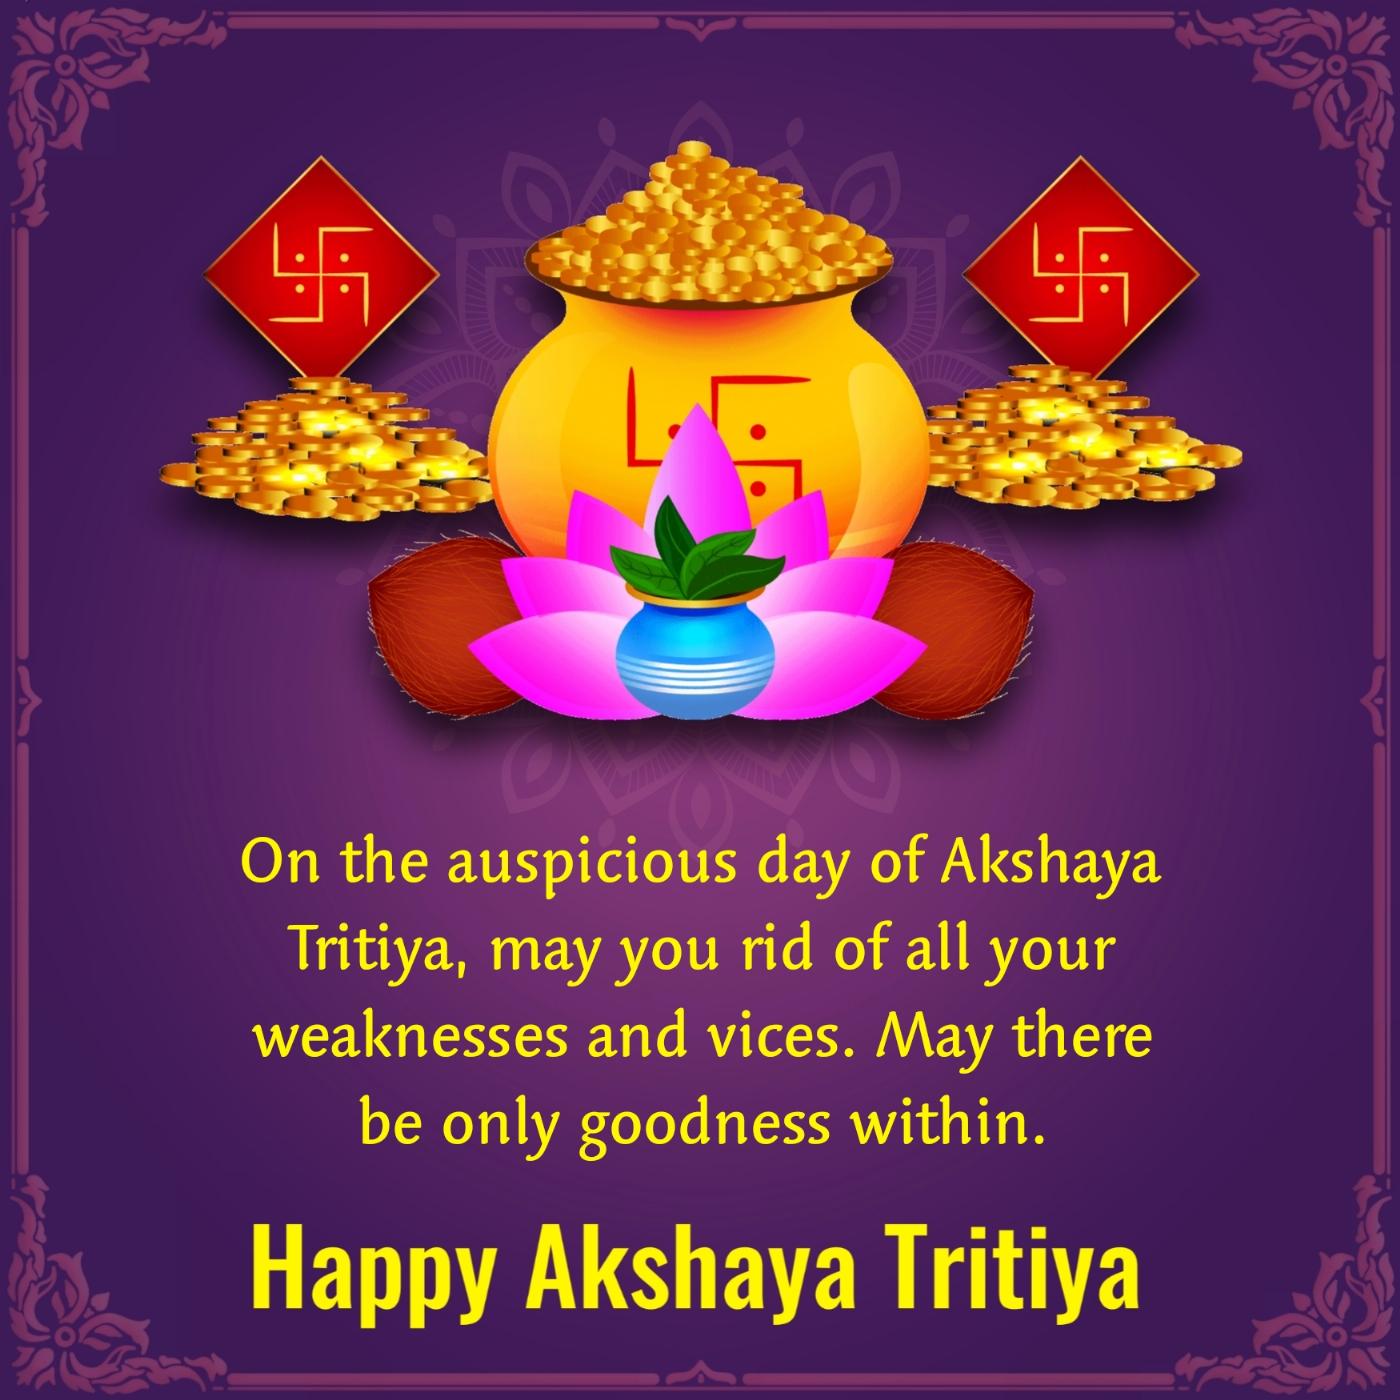 On the auspicious day of Akshaya Tritiya may you rid of